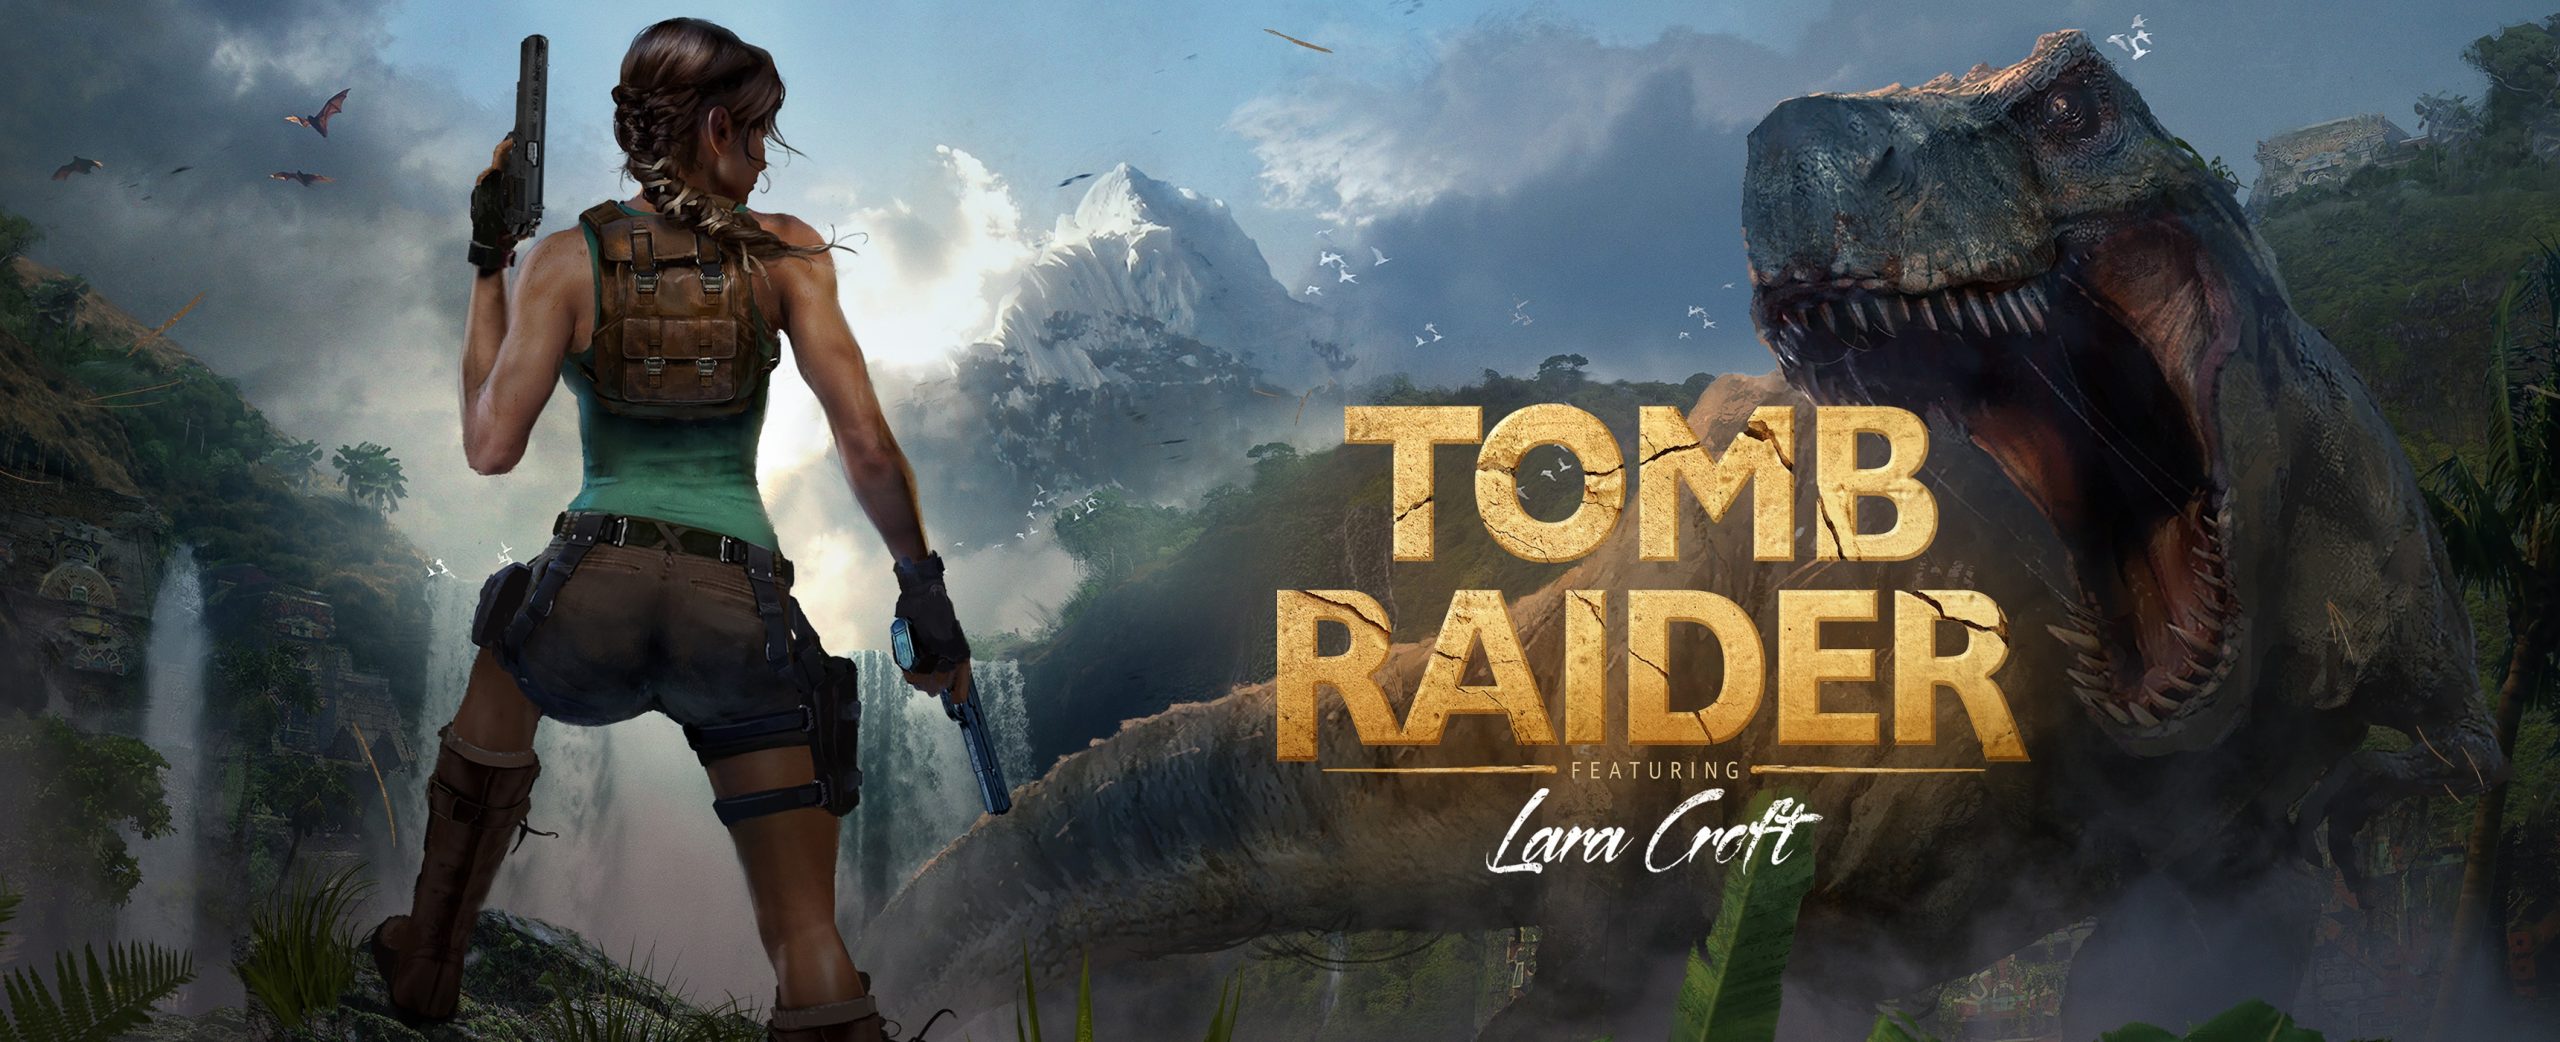 Estreno web 25 Aniversario Tomb Raider